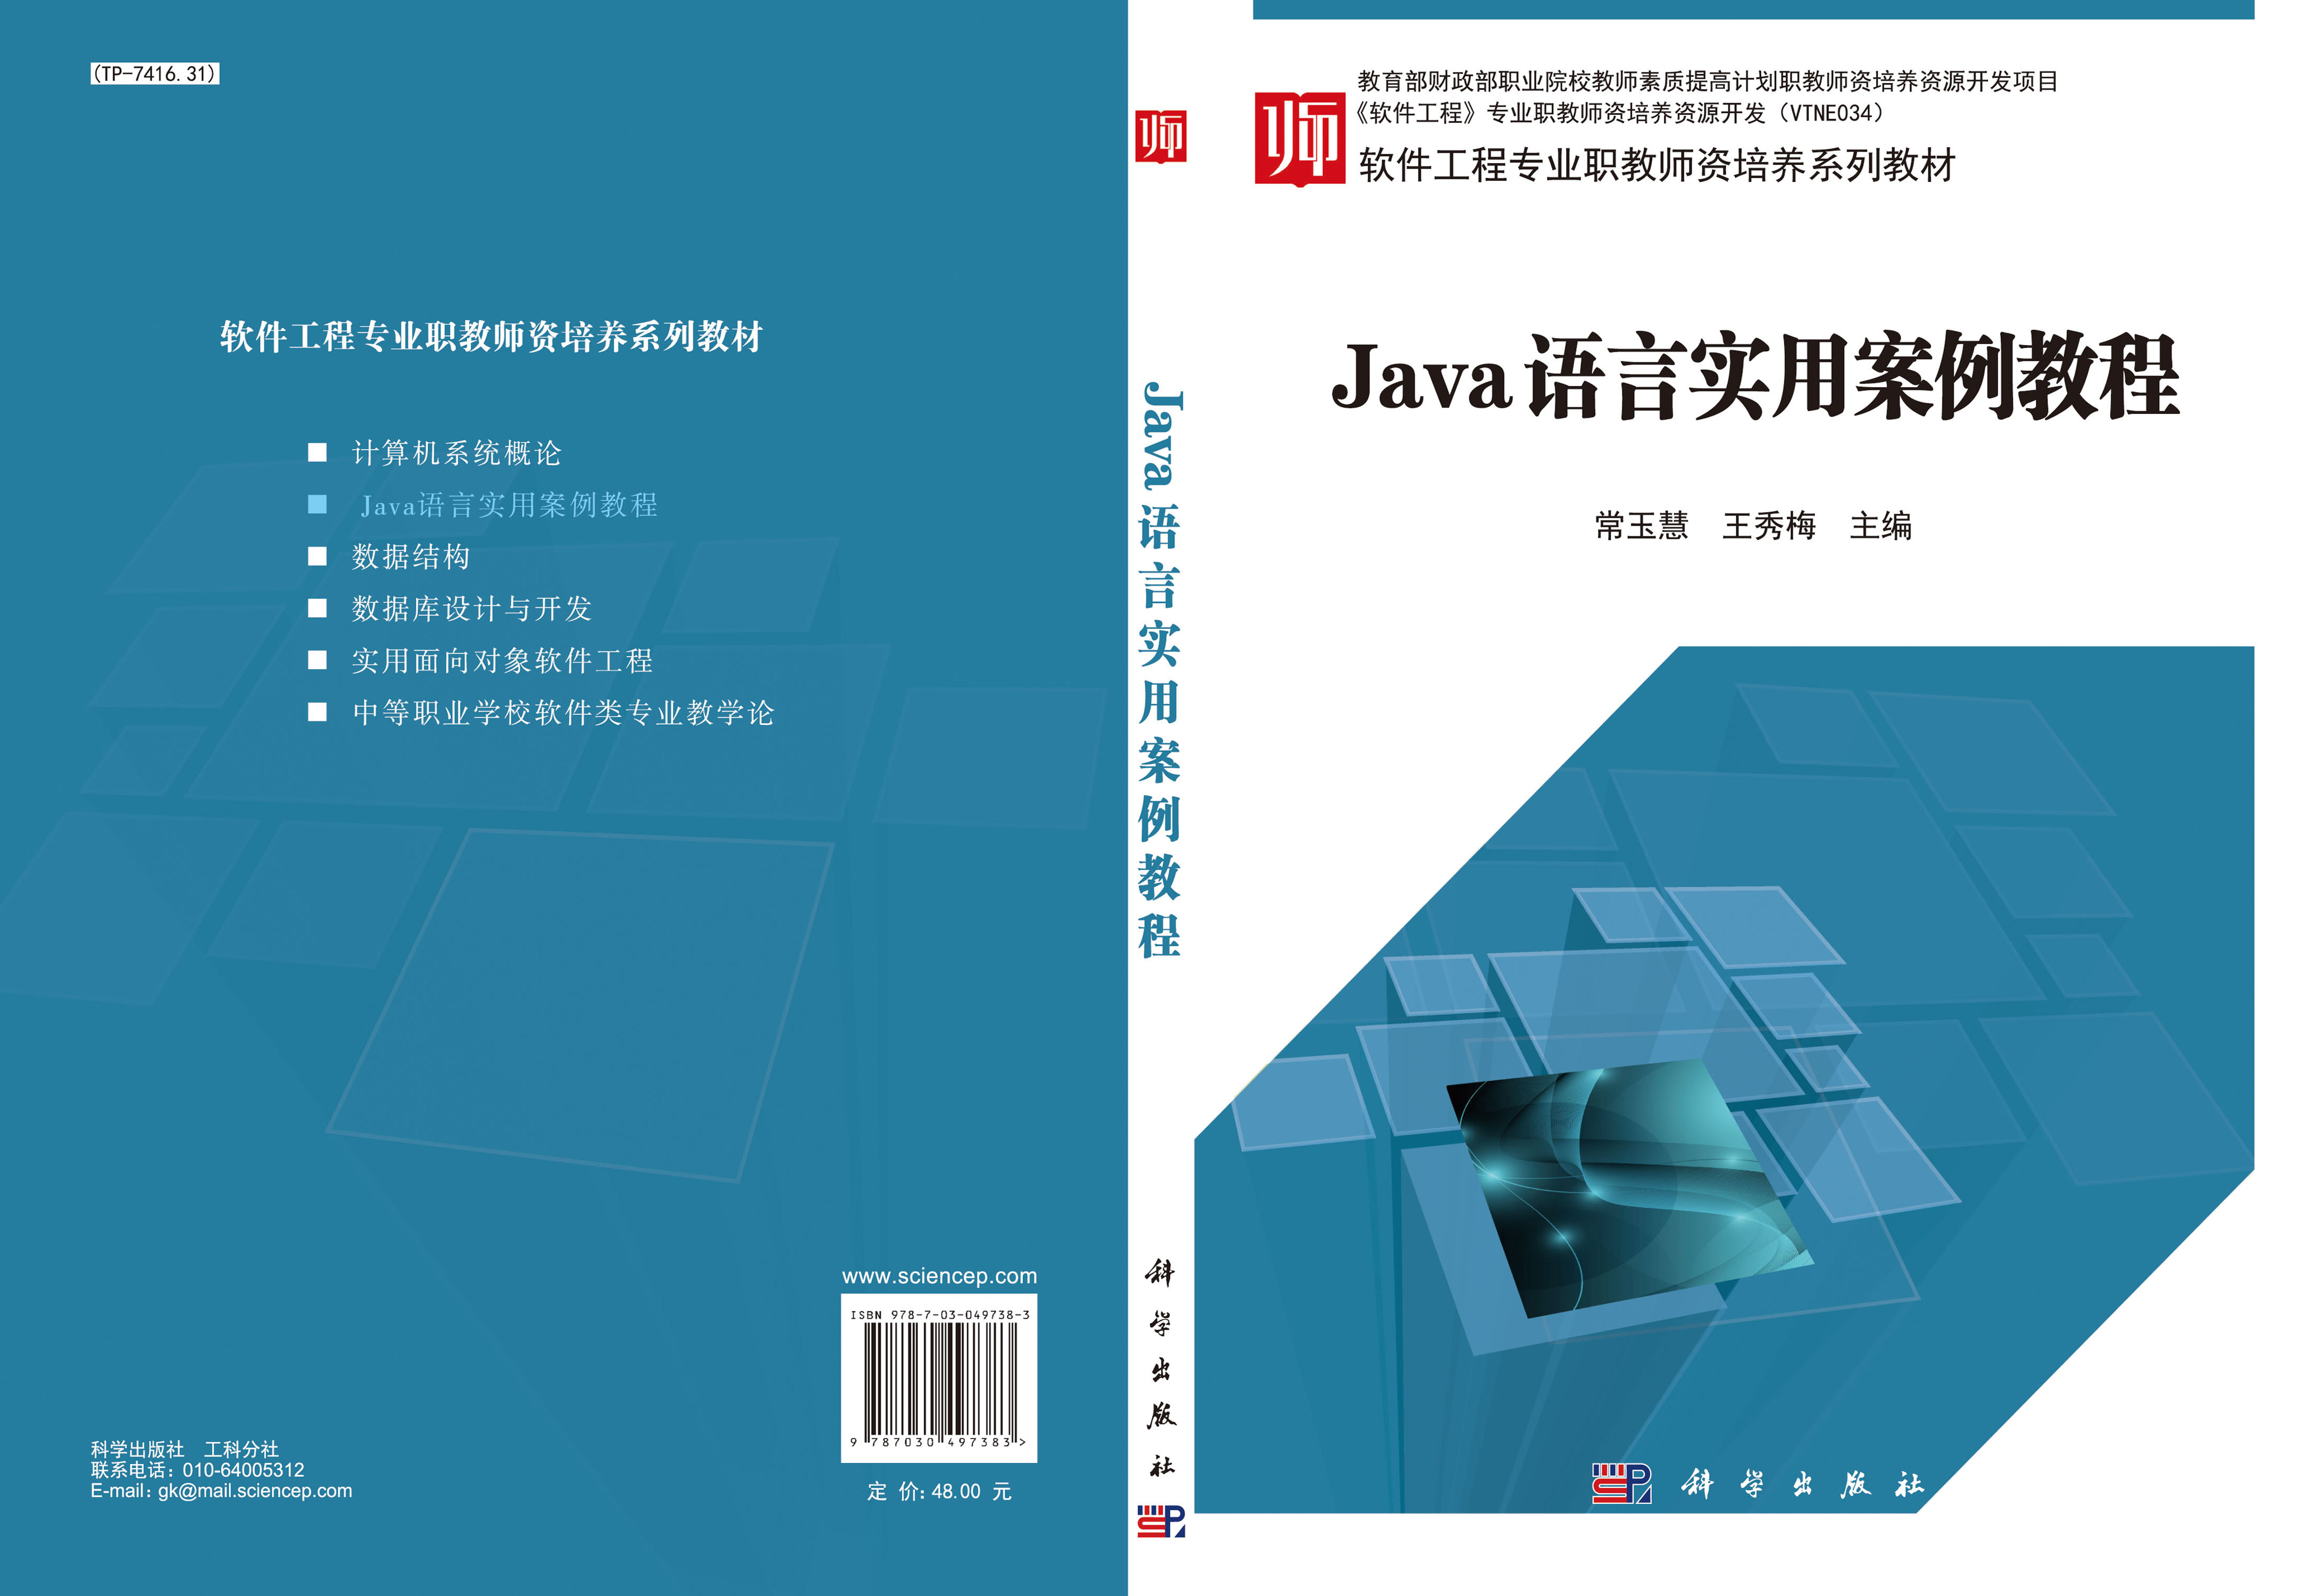 Java语言实用案例教程